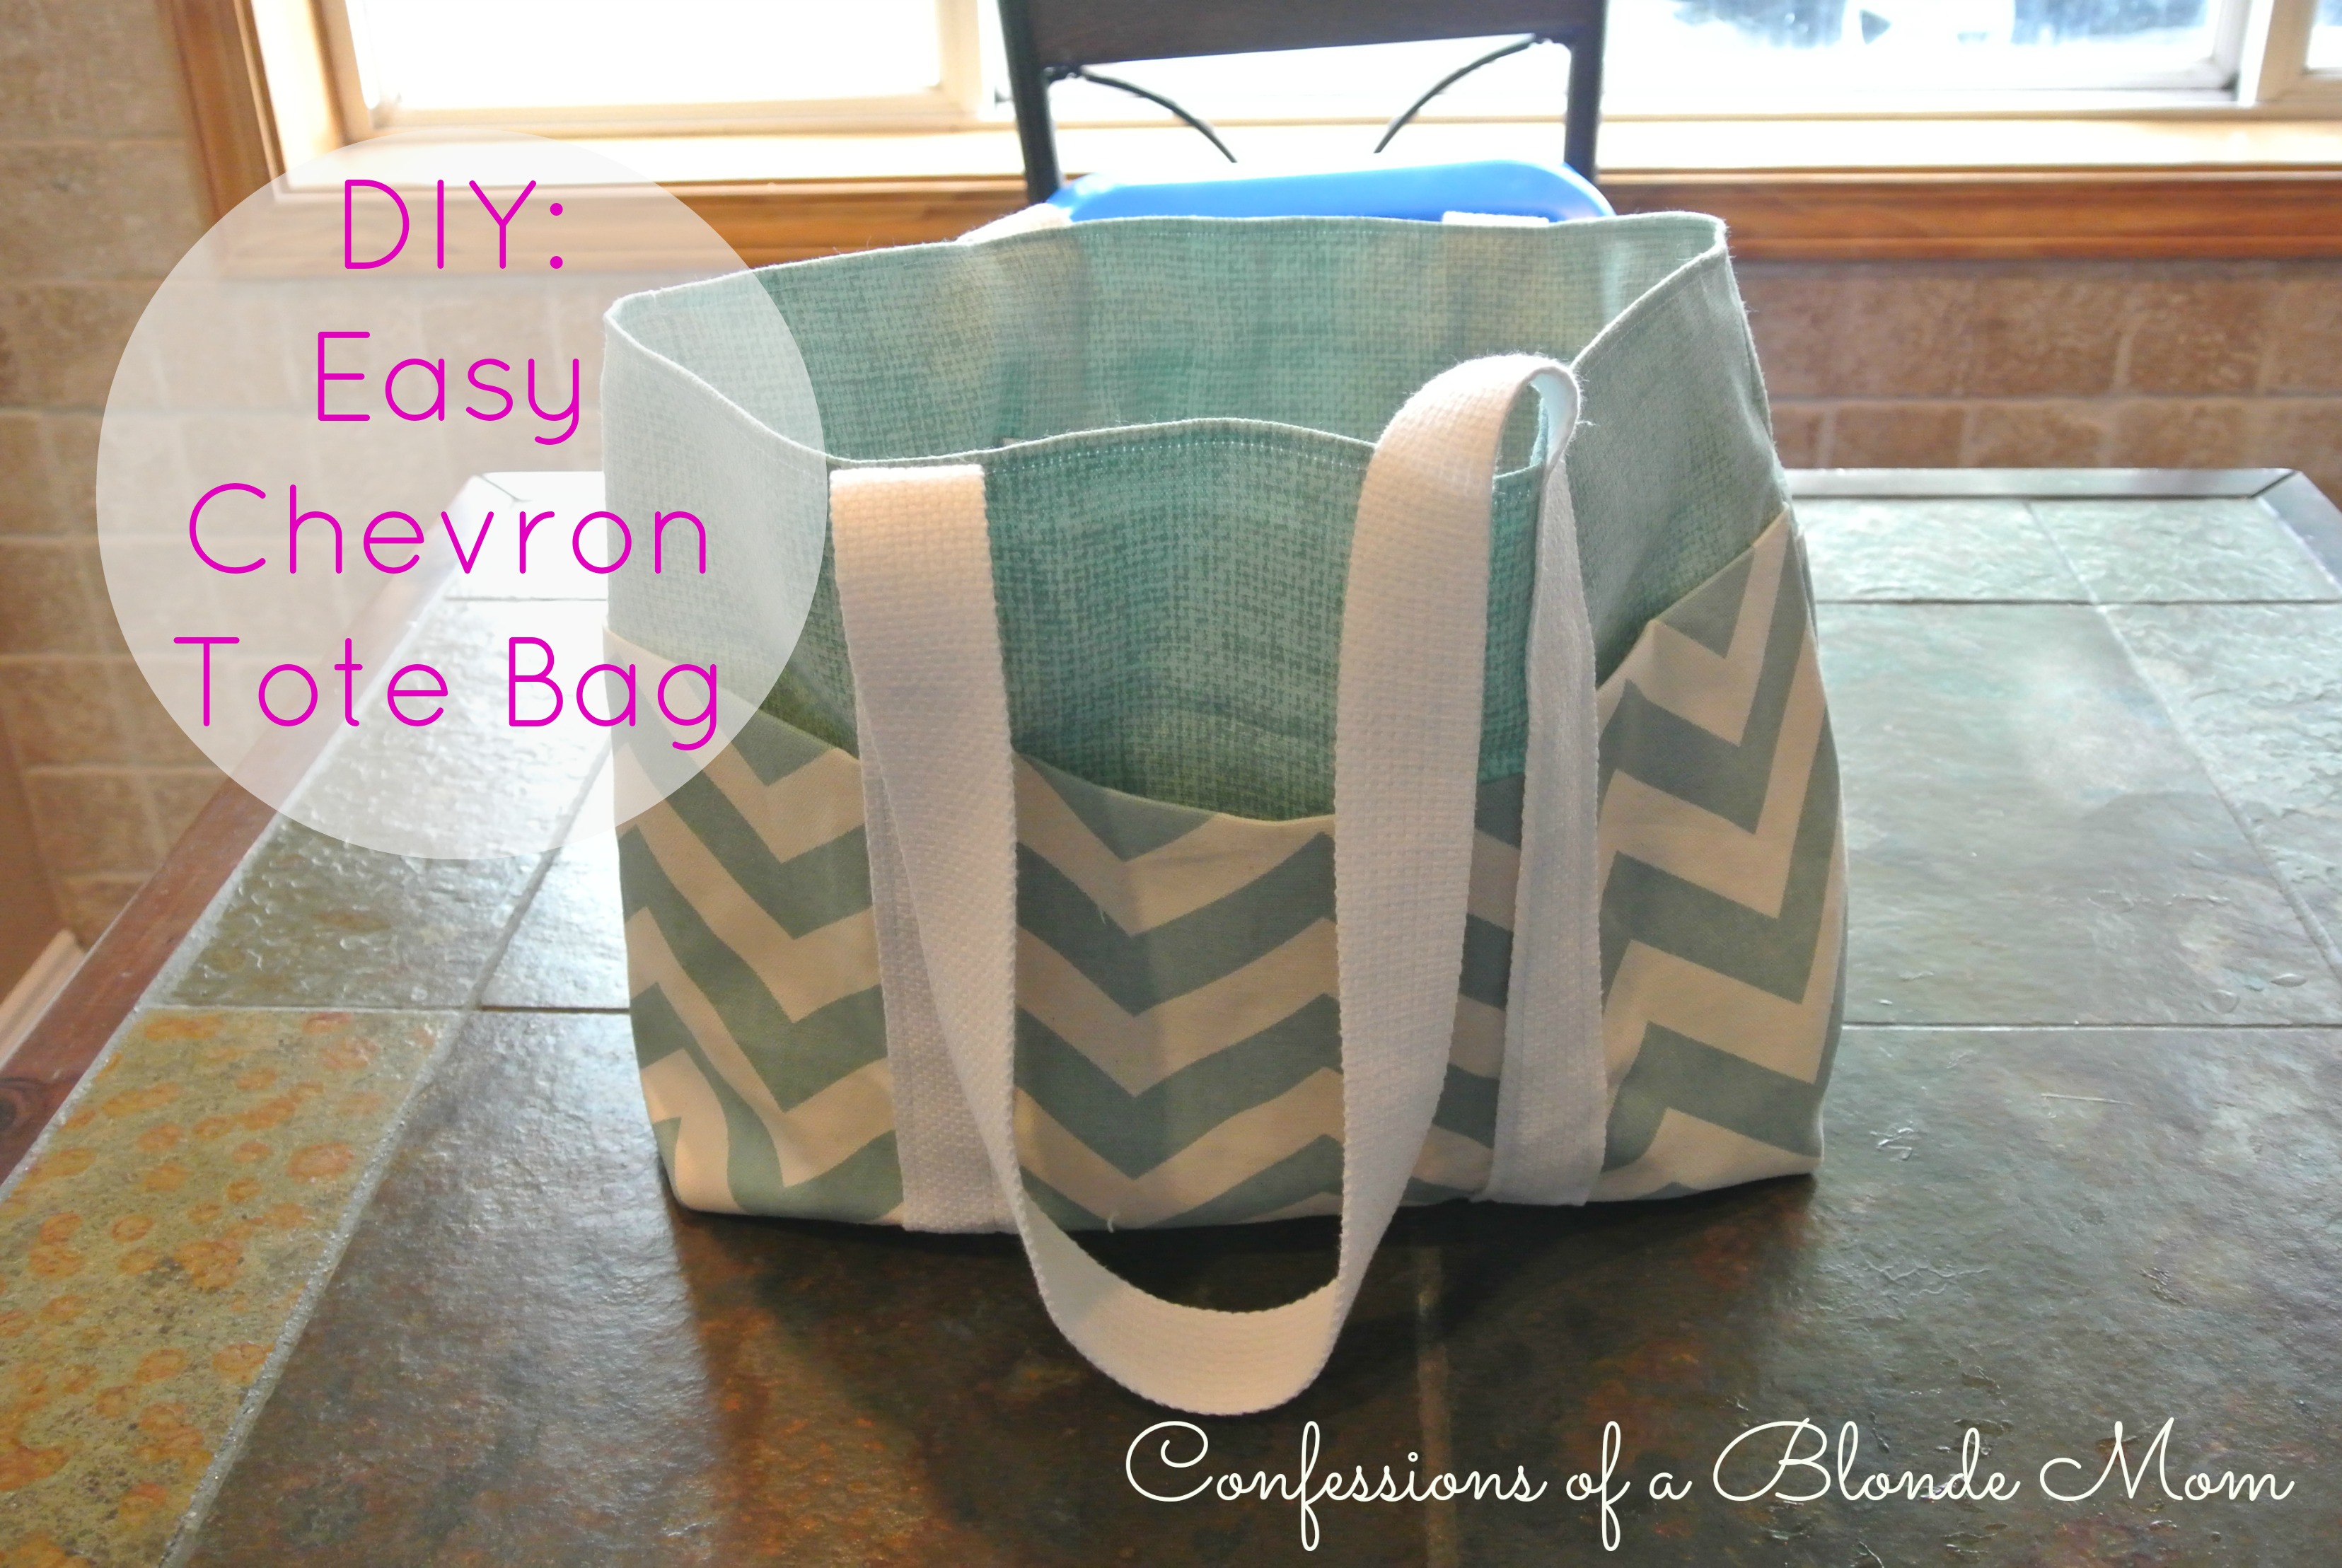 DIY Easy Chevron Tote Bag